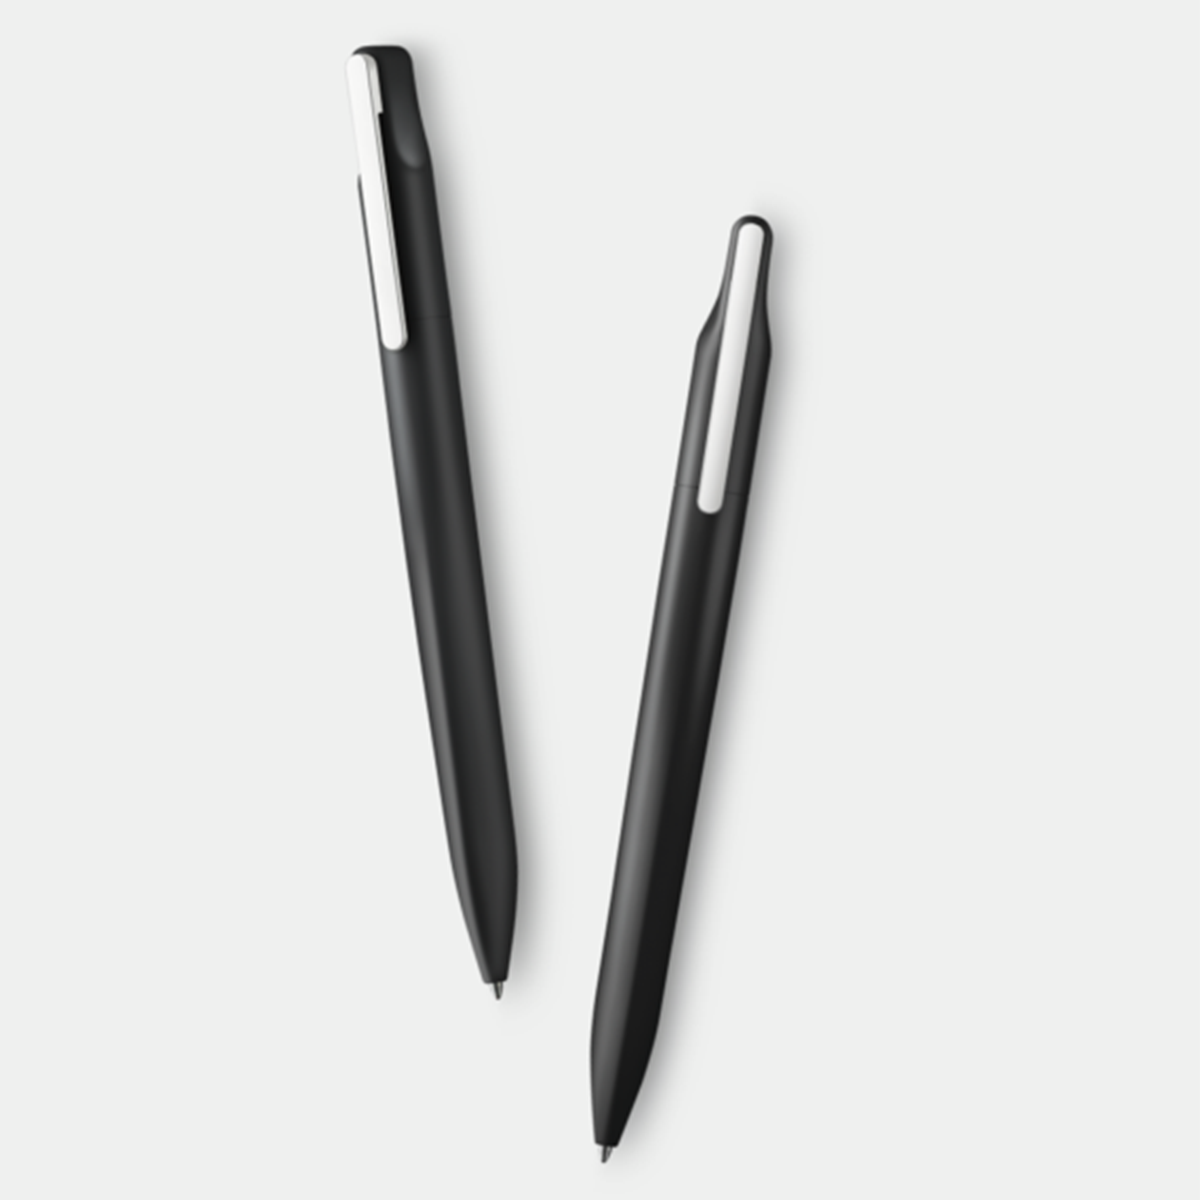 Xevo Ballpoint pen Black in the group Pens / Fine Writing / Ballpoint Pens at Pen Store (126992)